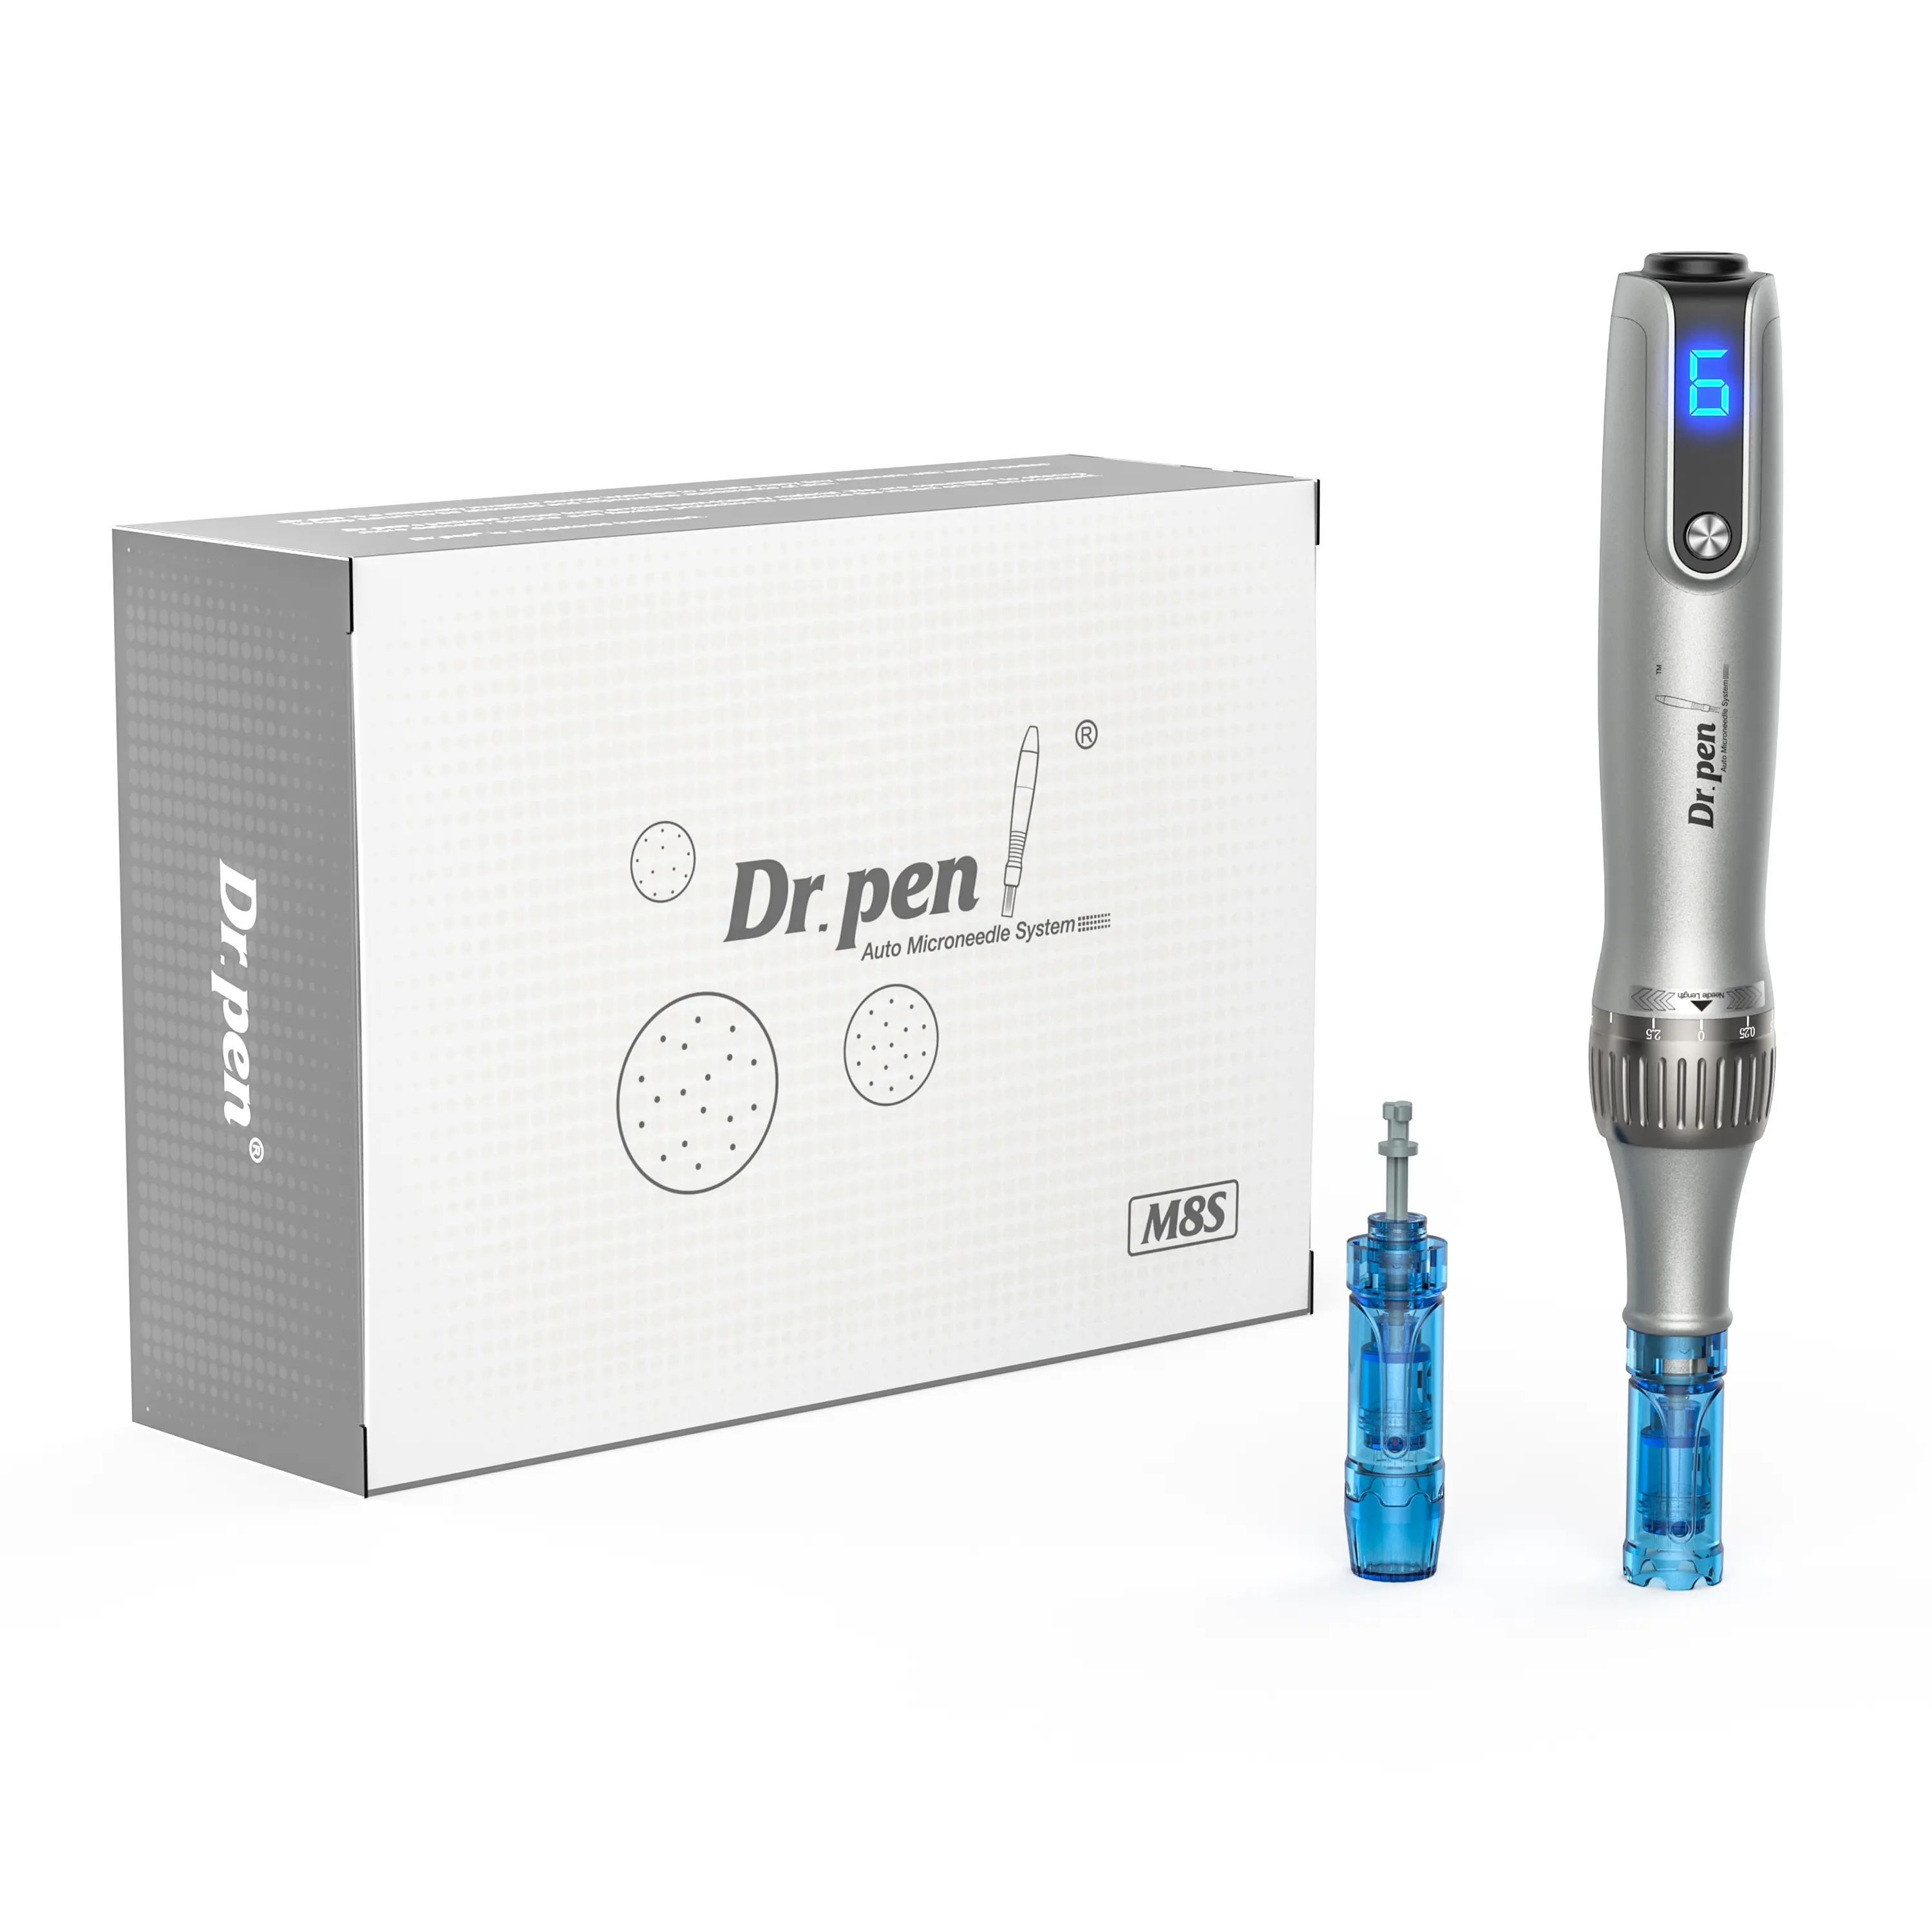 Neue Dr.pen M8S Mikron adel elektrische Derma Pen Beauty-Ausrüstung Hautpflege Akne-Behandlung